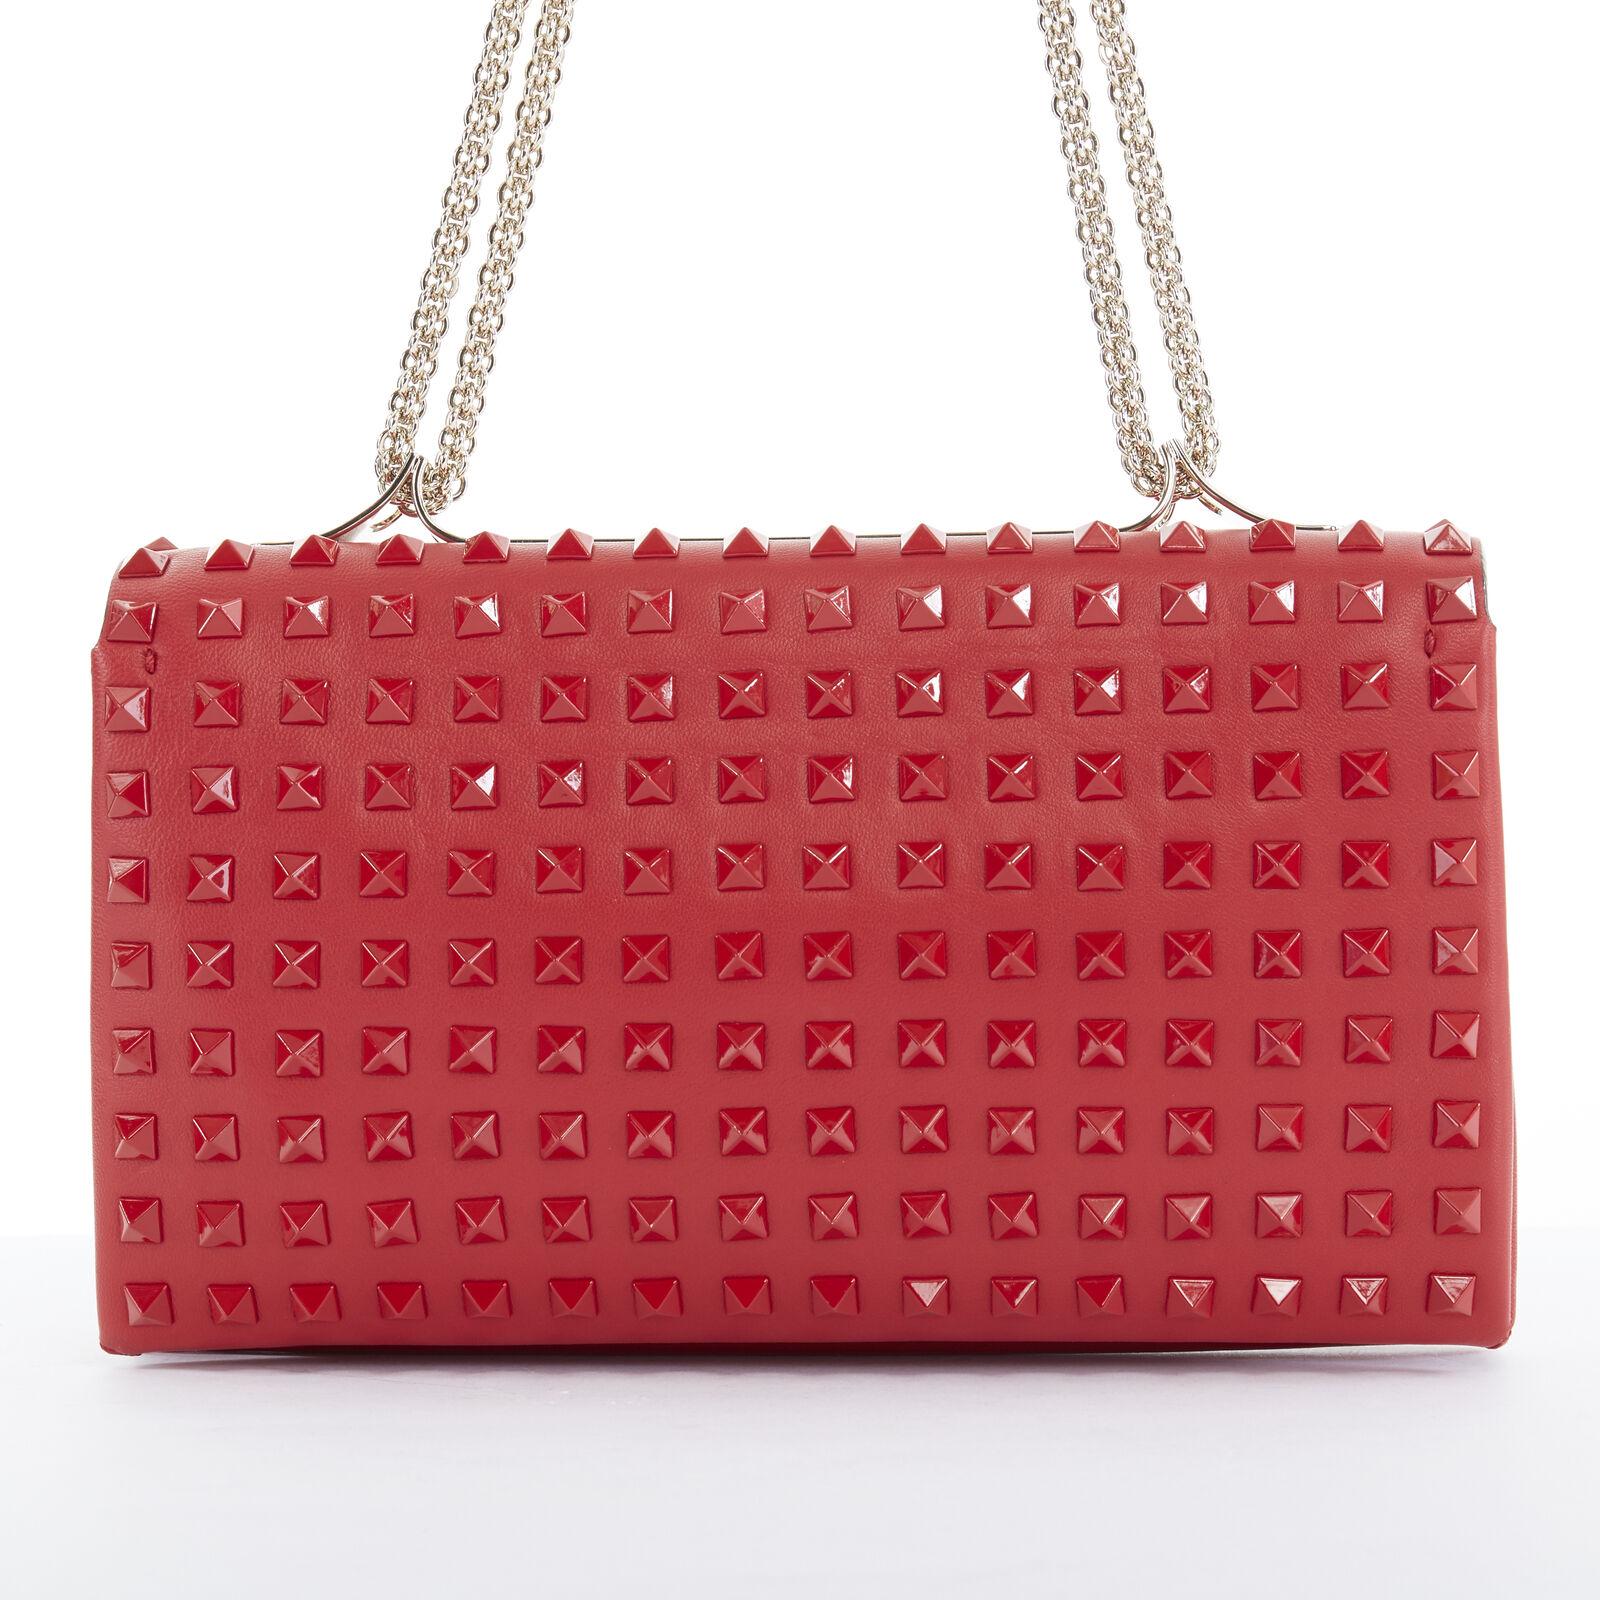 Women's VALENTINO Rockstud Va Va Voom red leather tonal stud embellished flap clutch bag